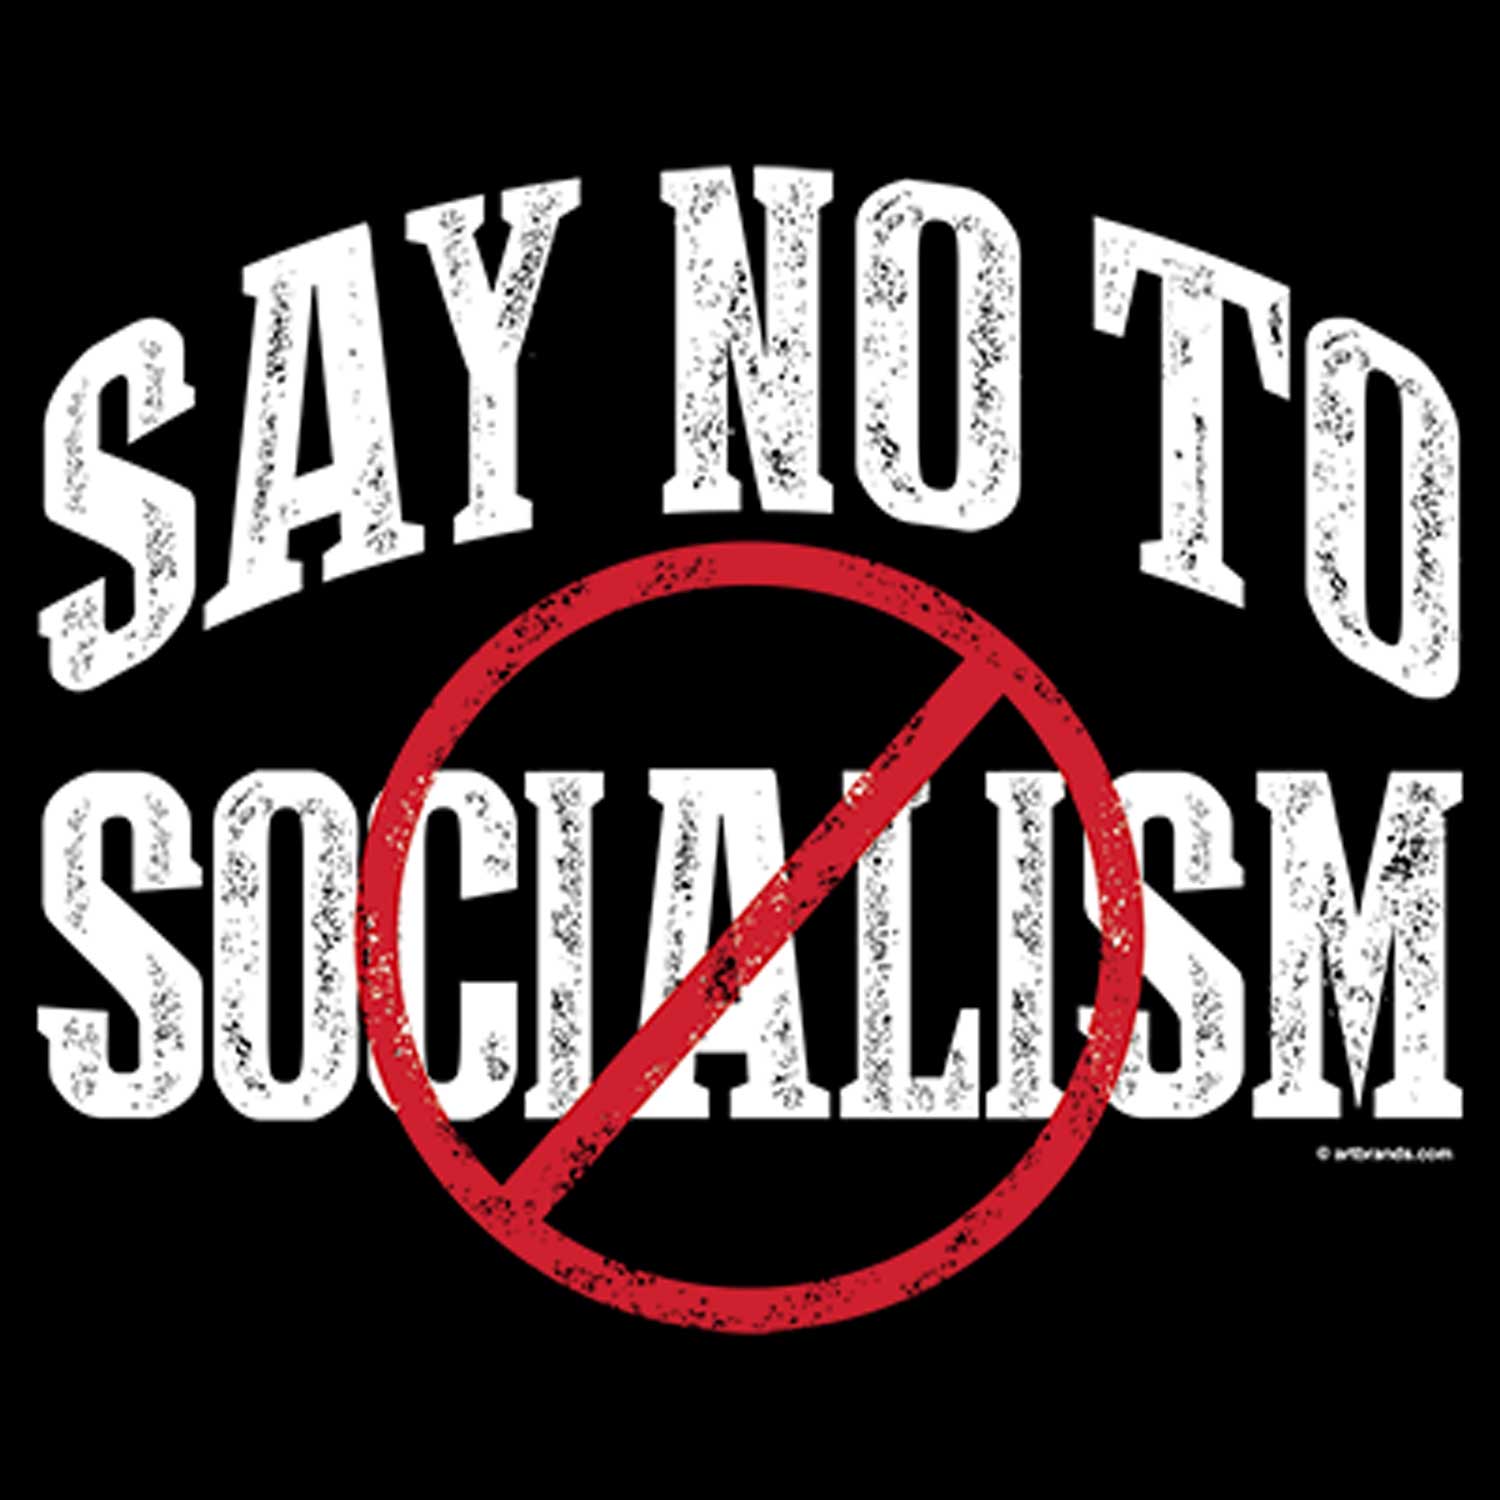 Say No To Socialism Printed T-Shirt-Black